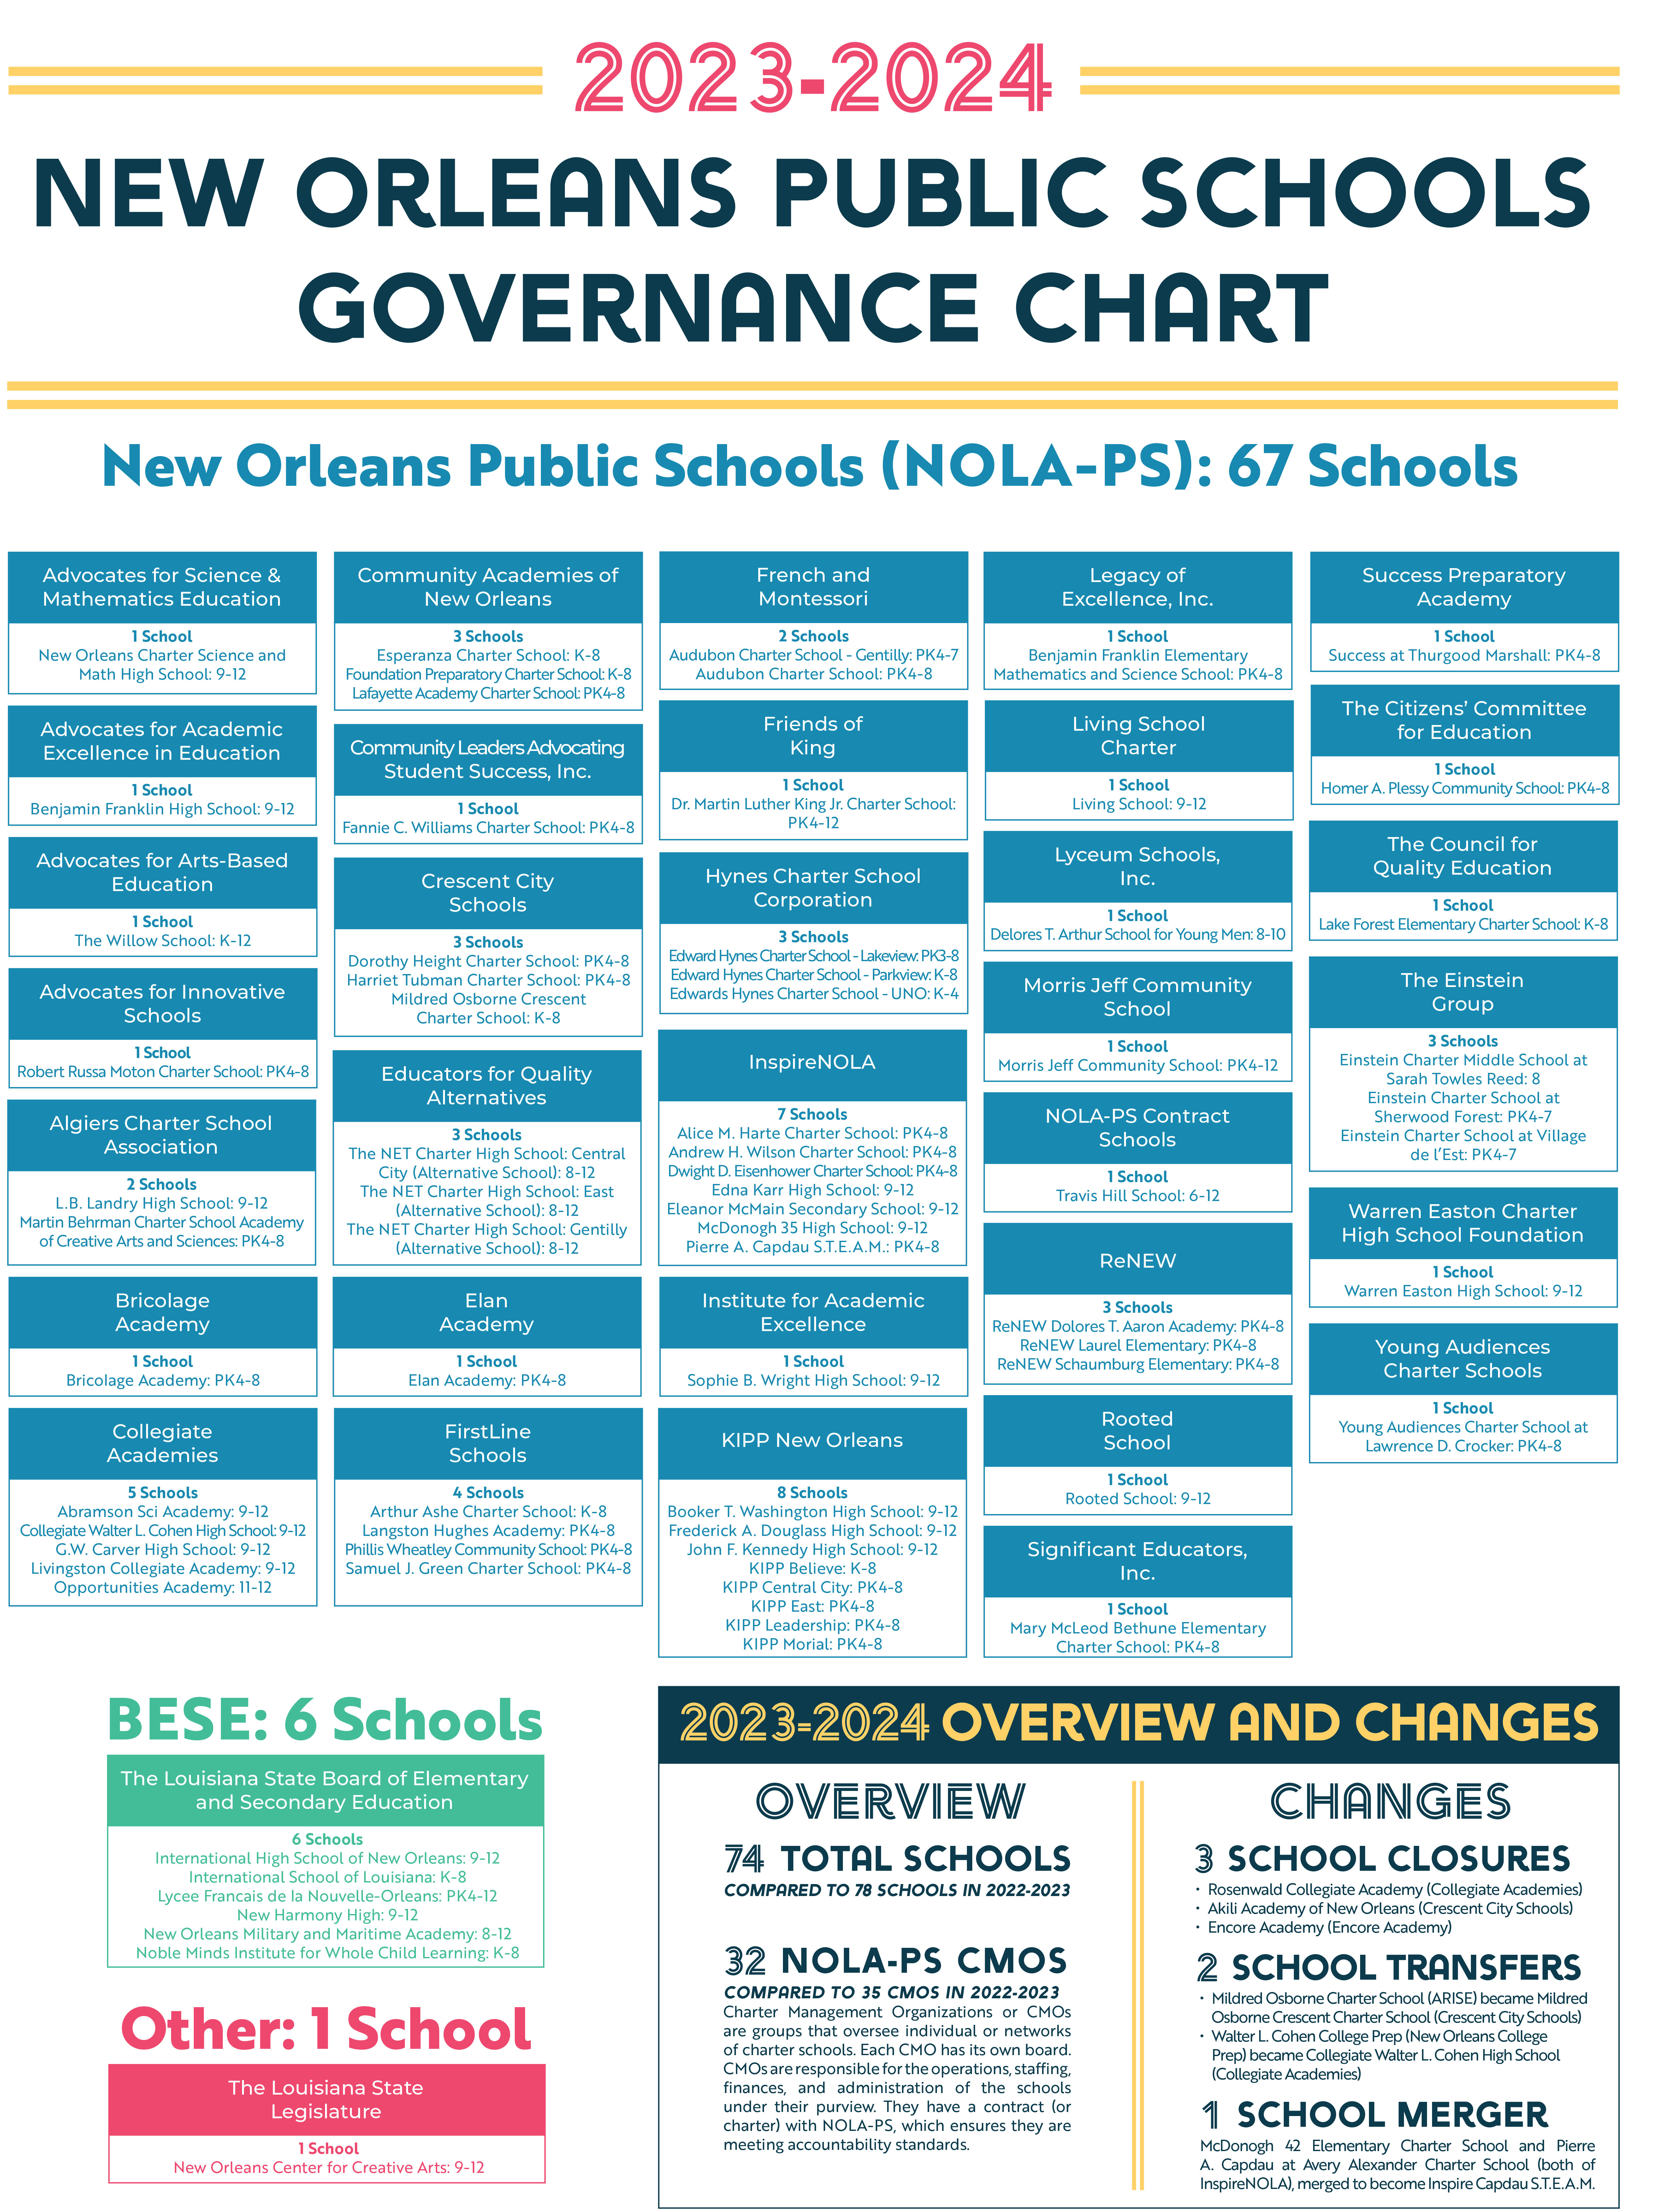 Governance Chart 2023-24